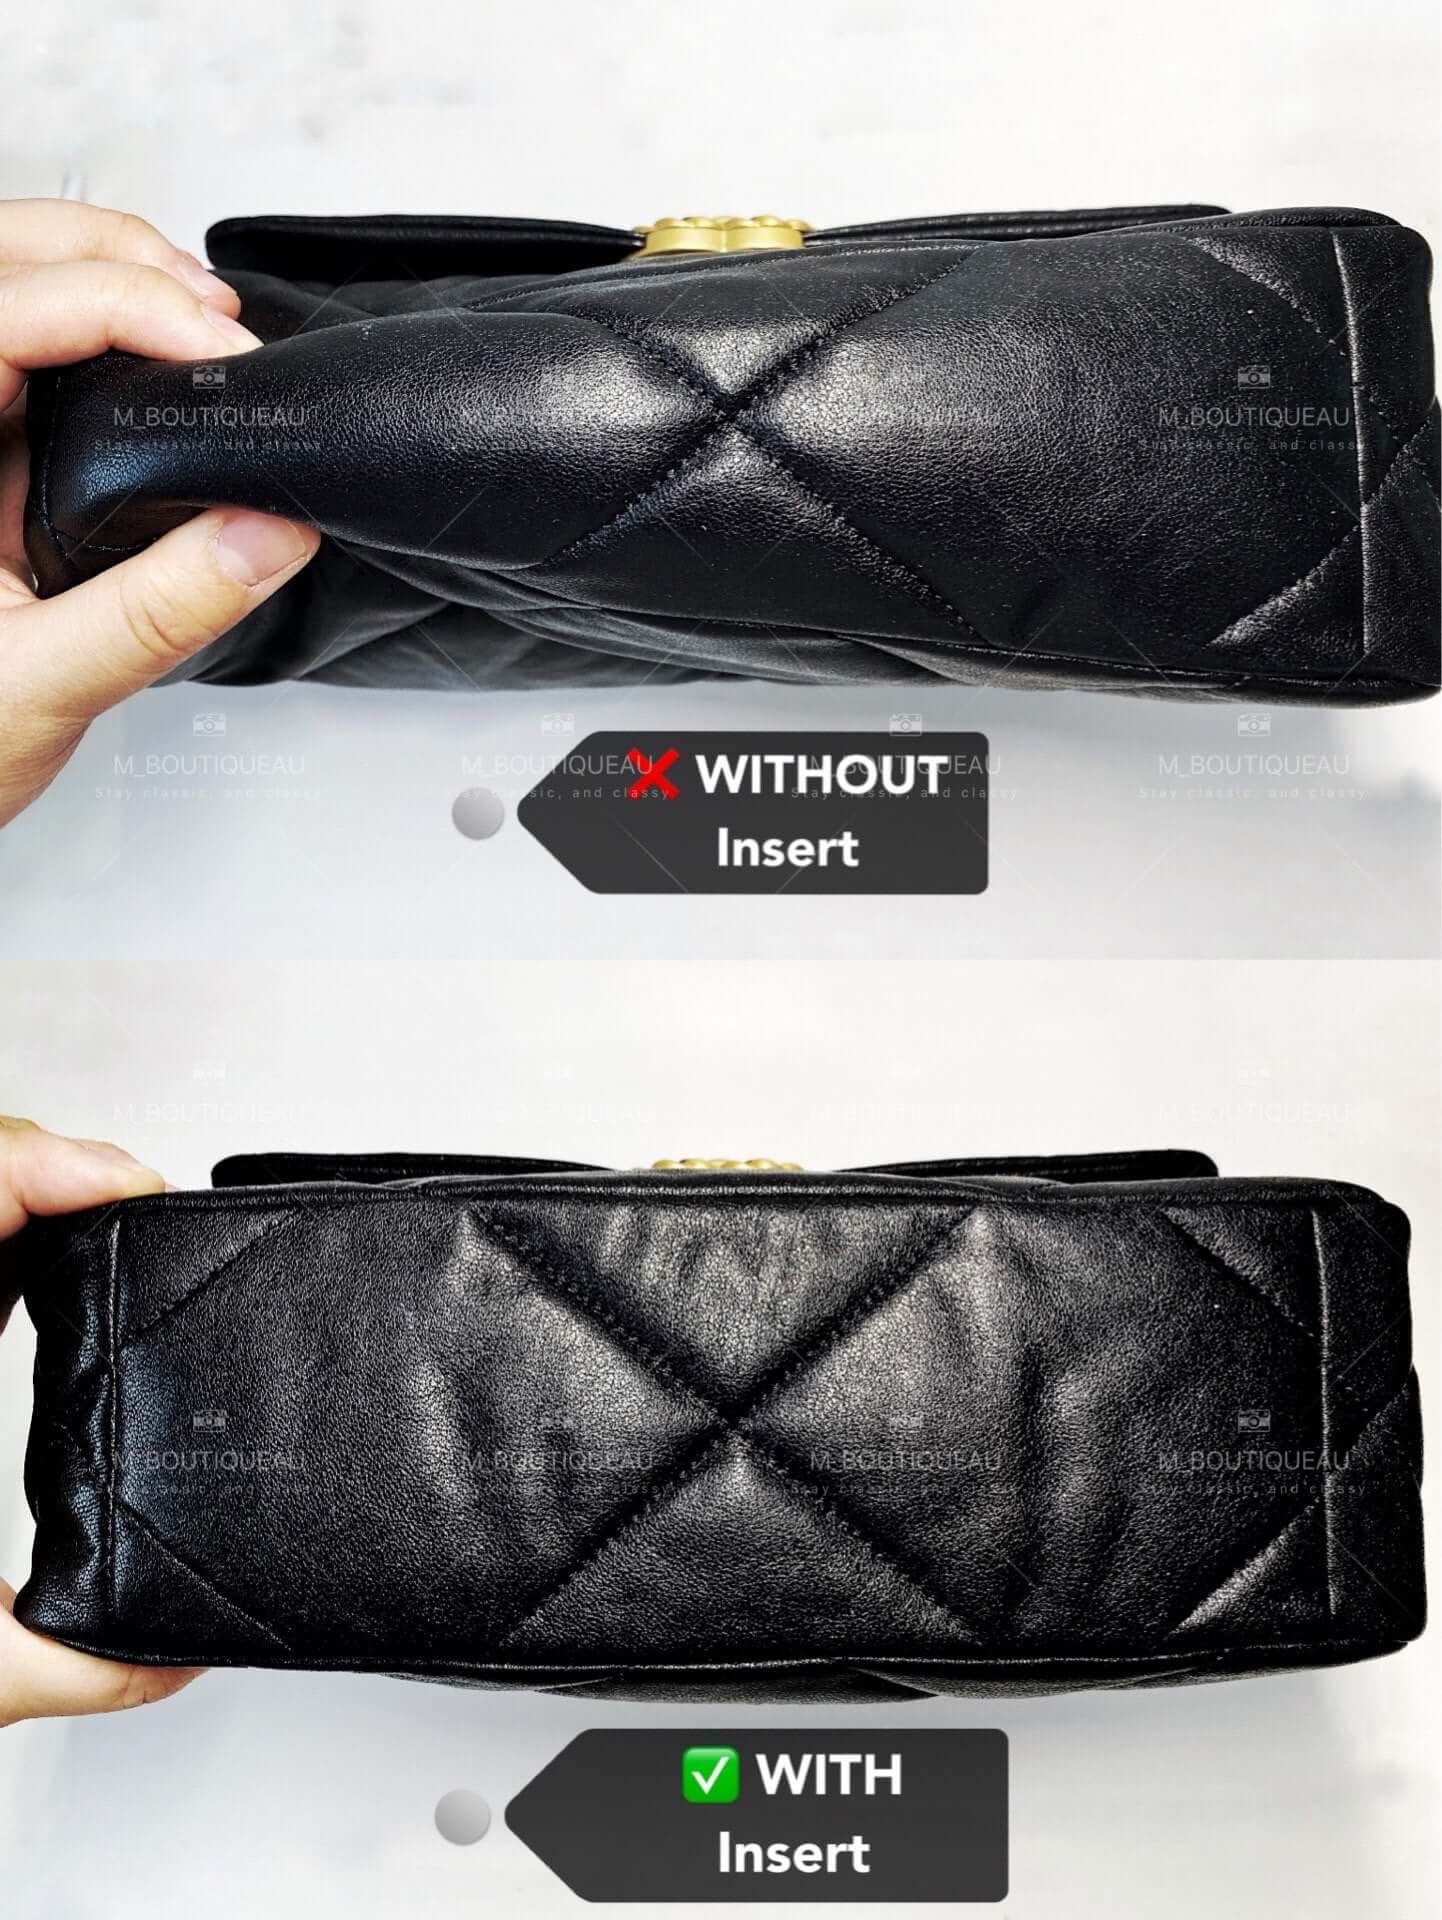 Base Shaper / Bag Insert Saver for CHANEL 19 Small Flap Bag (26cm)